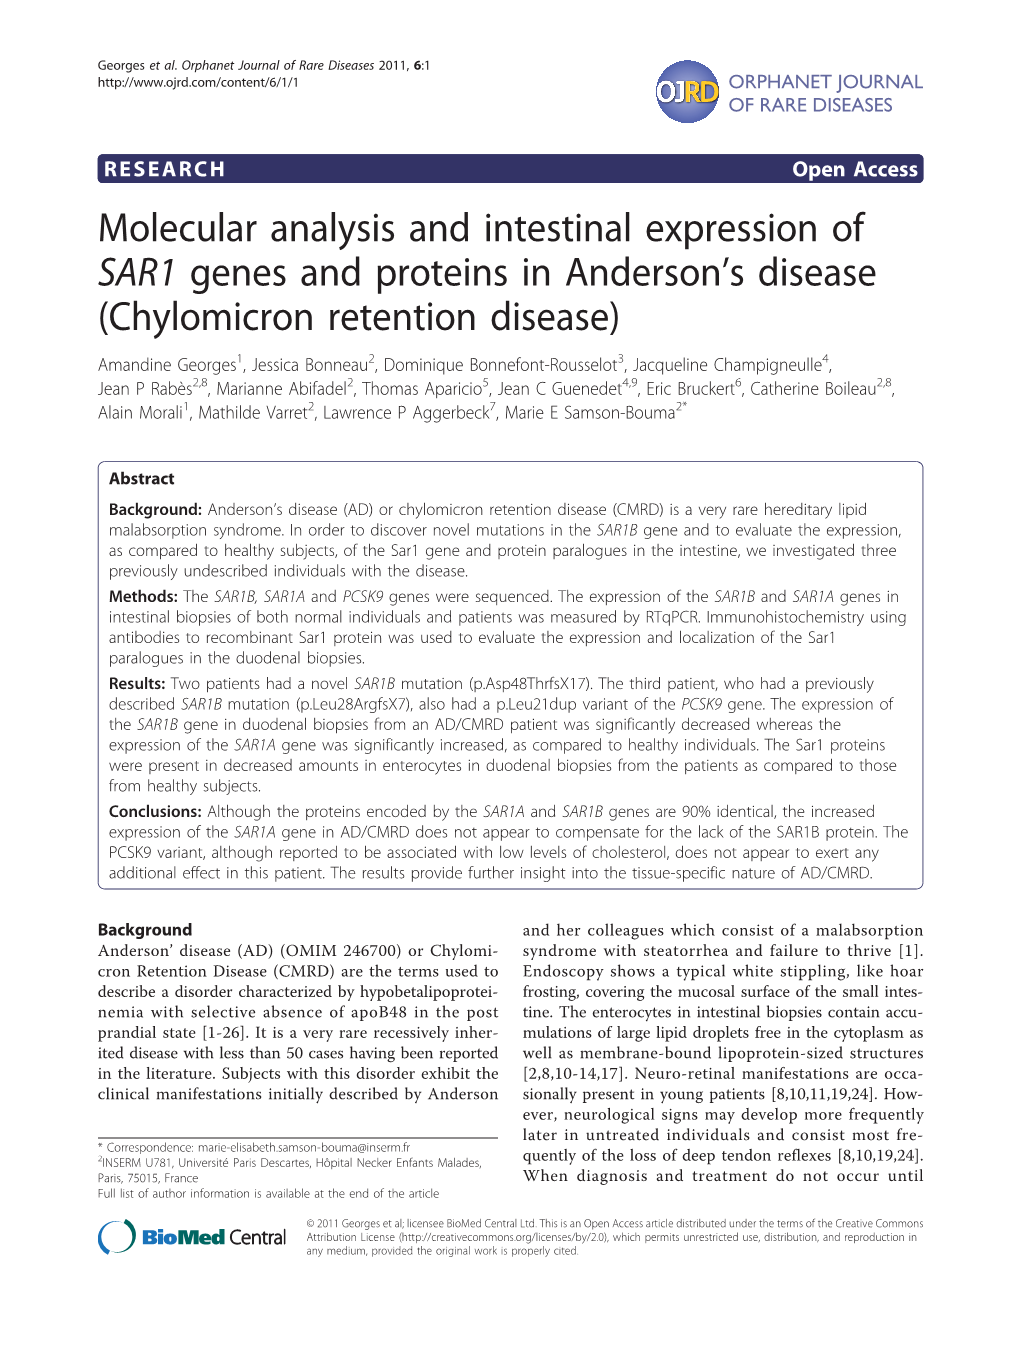 Molecular Analysis and Intestinal Expression of SAR1 Genes And